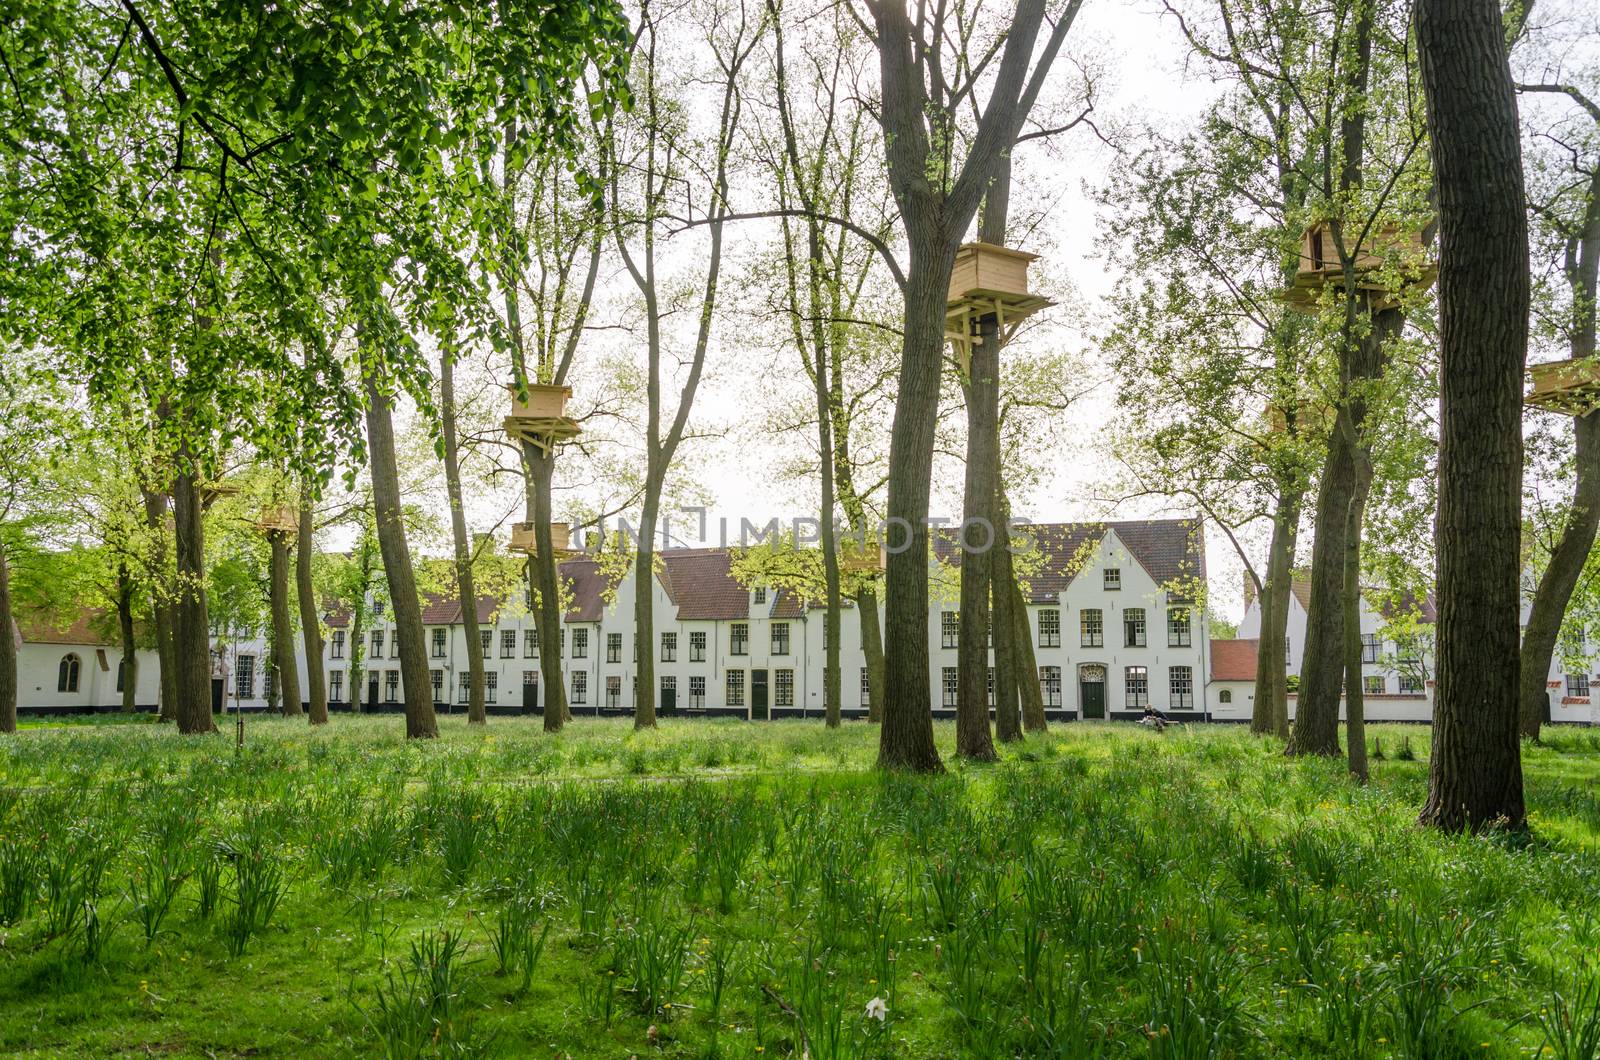 Tree Houses in the Begijnhof in Bruges, Belgium